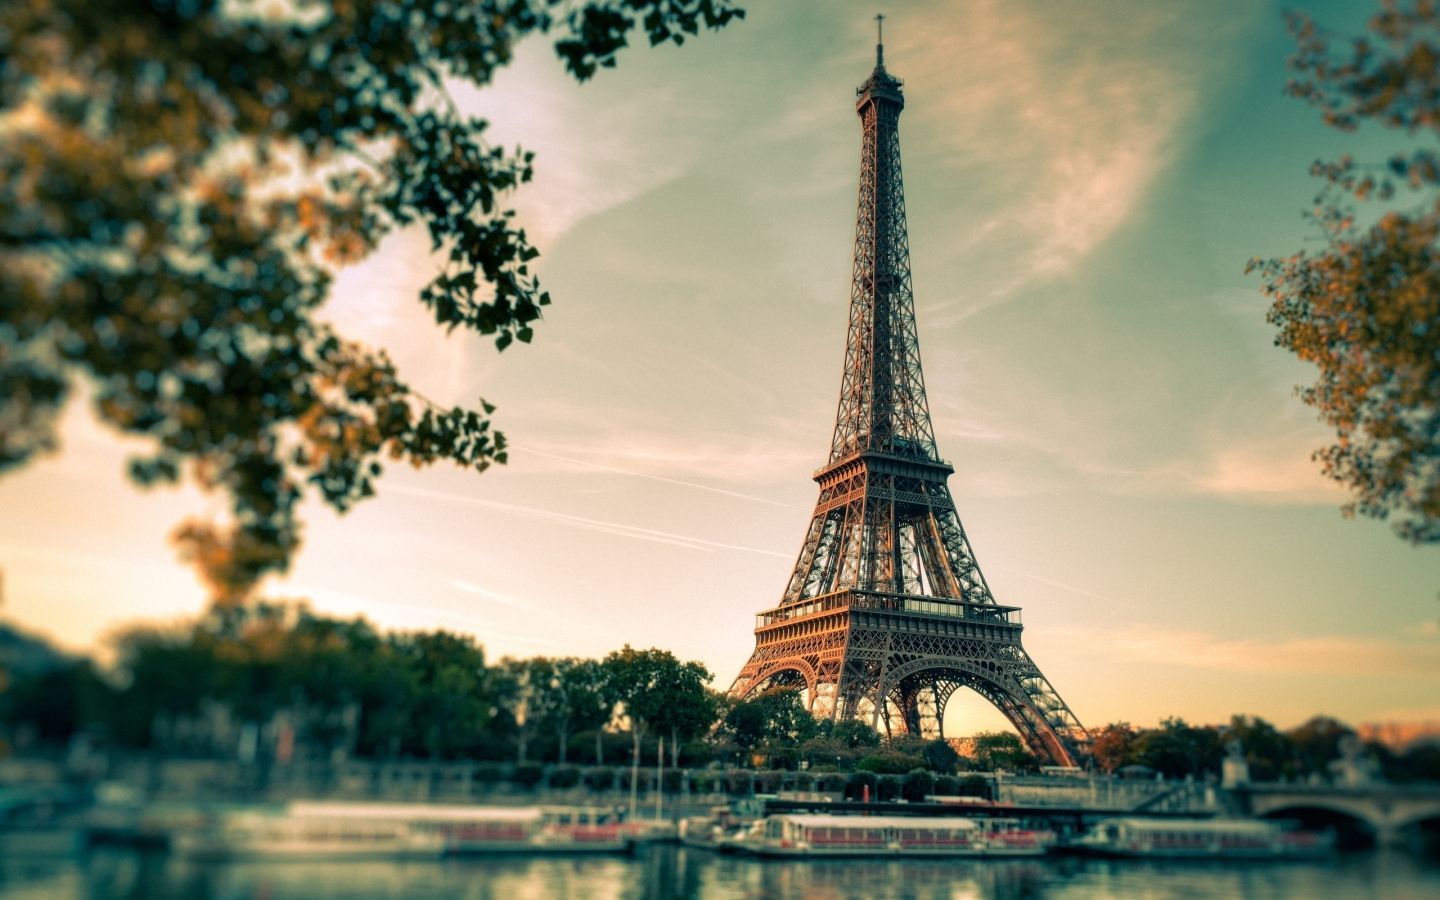 Lovely Eiffel Tower View Mac Wallpaper Download | Free Mac ...